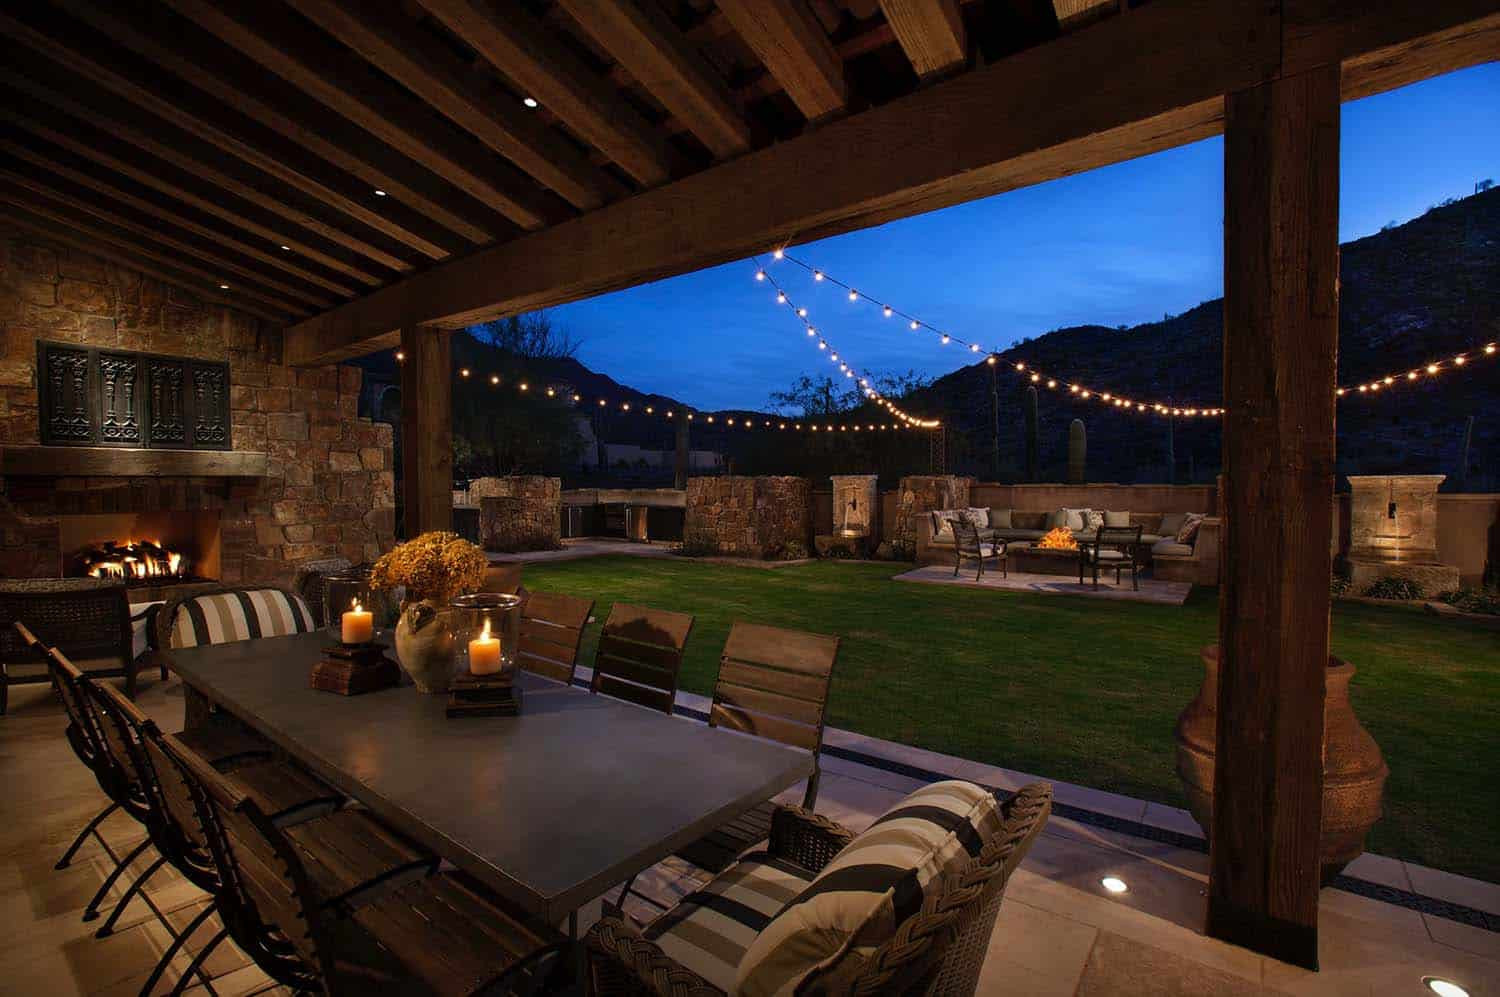 Backyard Retreat Ideas
 25 Amazingly cozy backyard retreats designed for entertaining